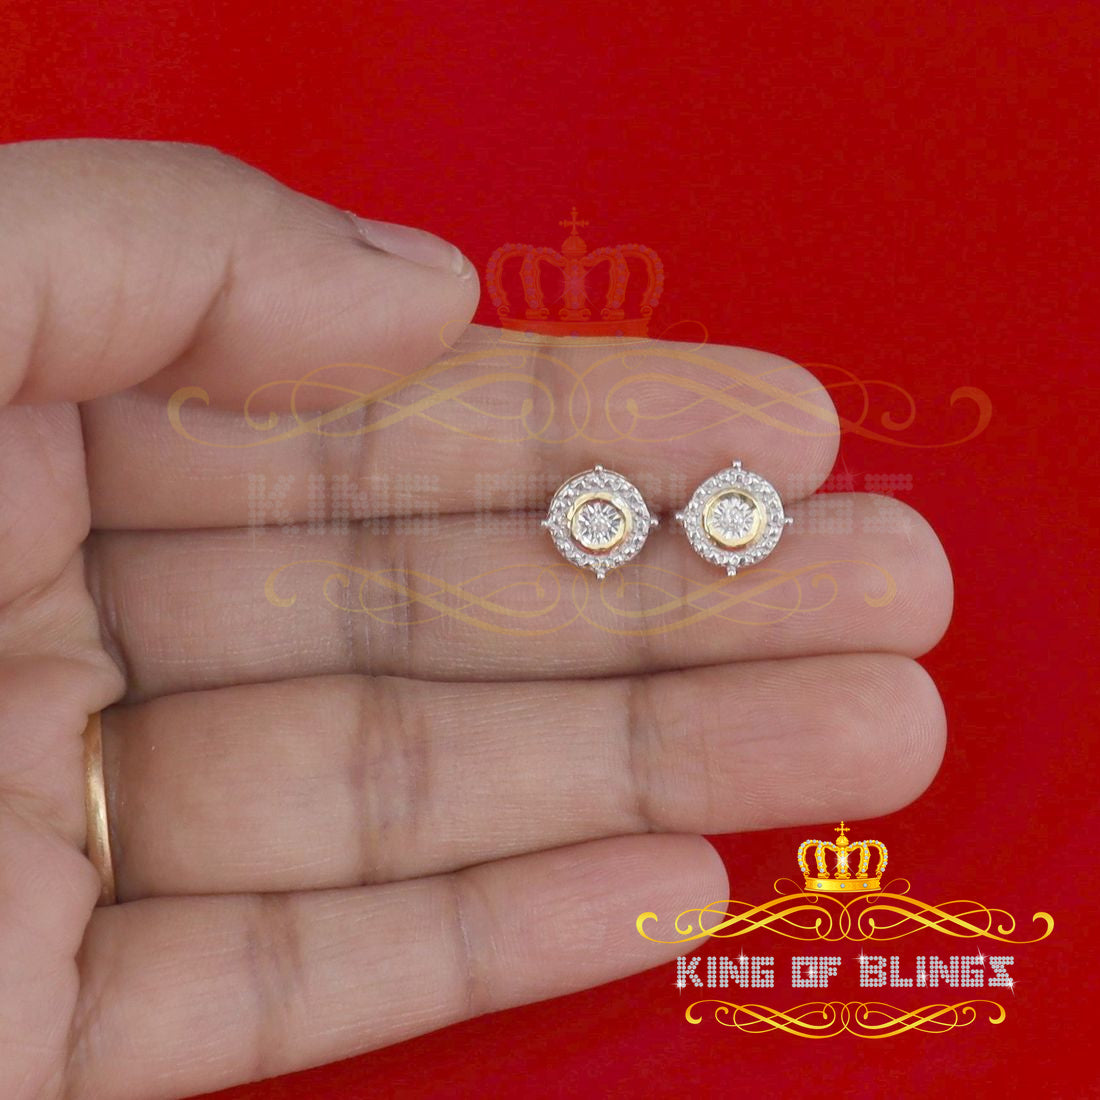 0.01ct Diamond 925 Sterling Silver Yellow For Men's & Women's Stud Round Earring KING OF BLINGS